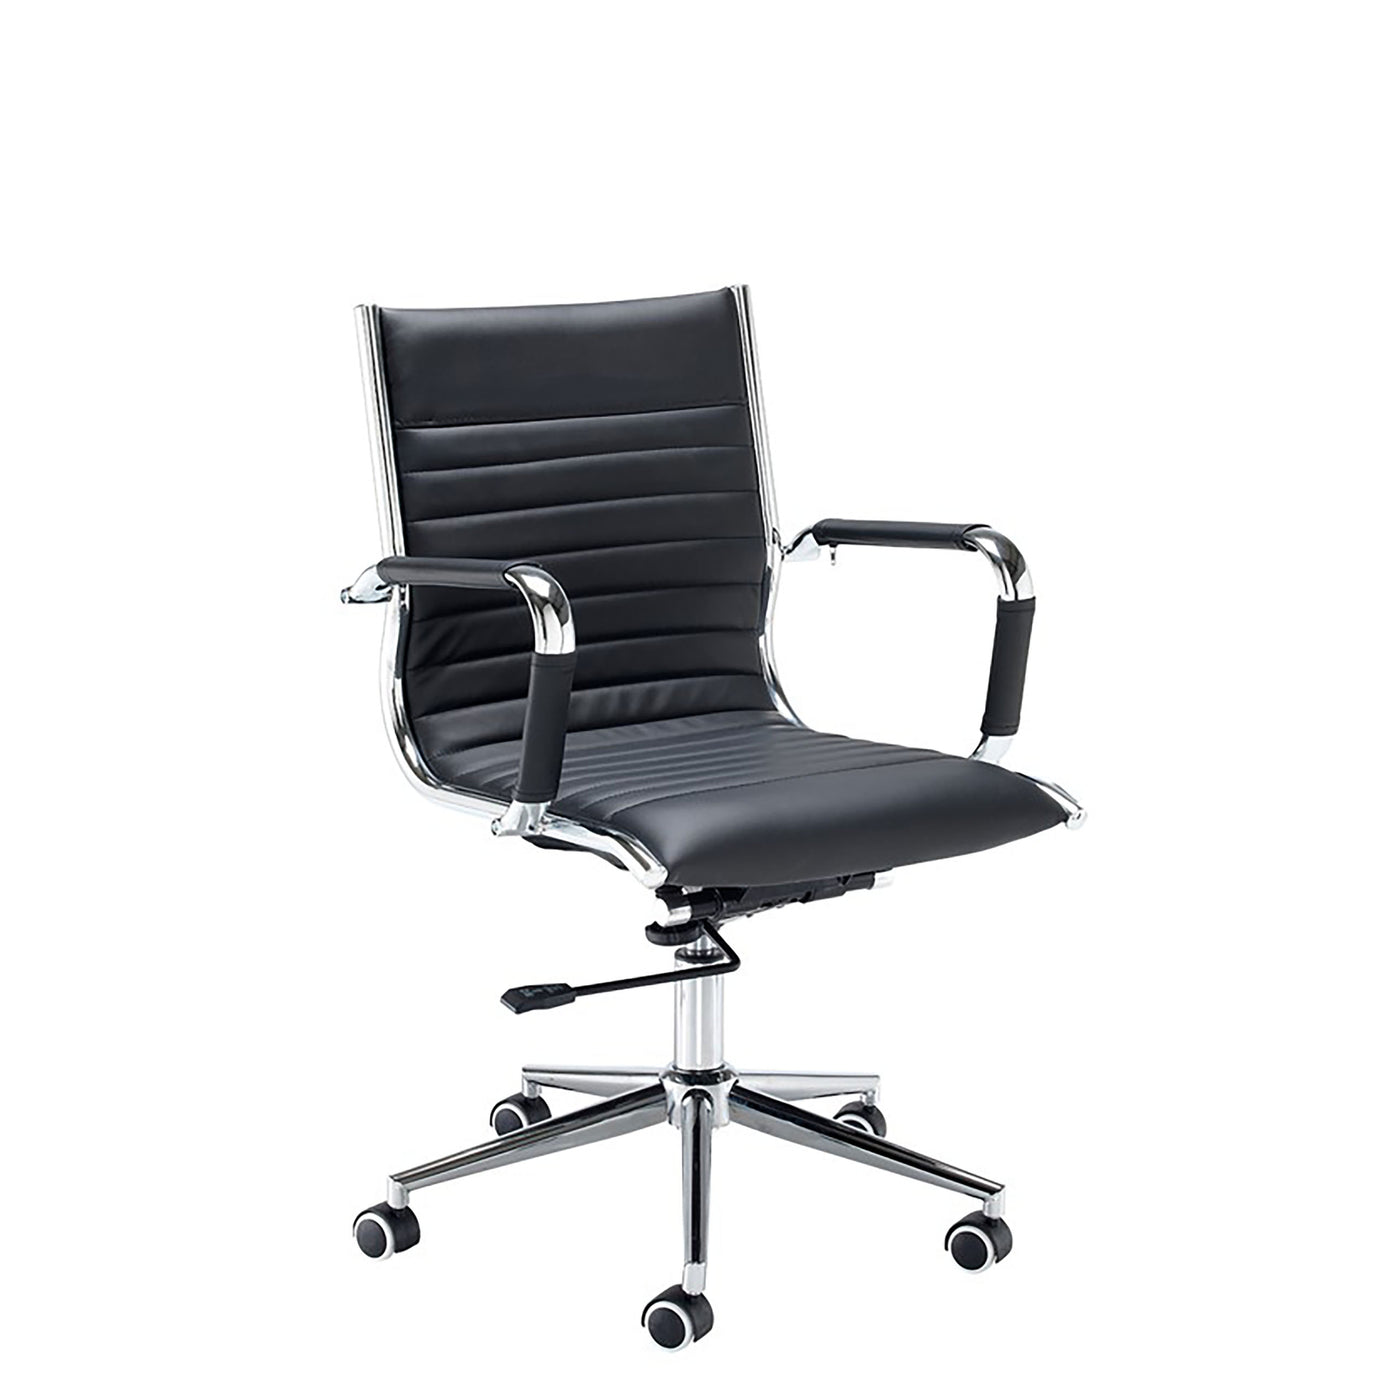 Bari Medium Back Faux Leather Home Office Chair | Home Office Furniture | Ergonomic Office Chair